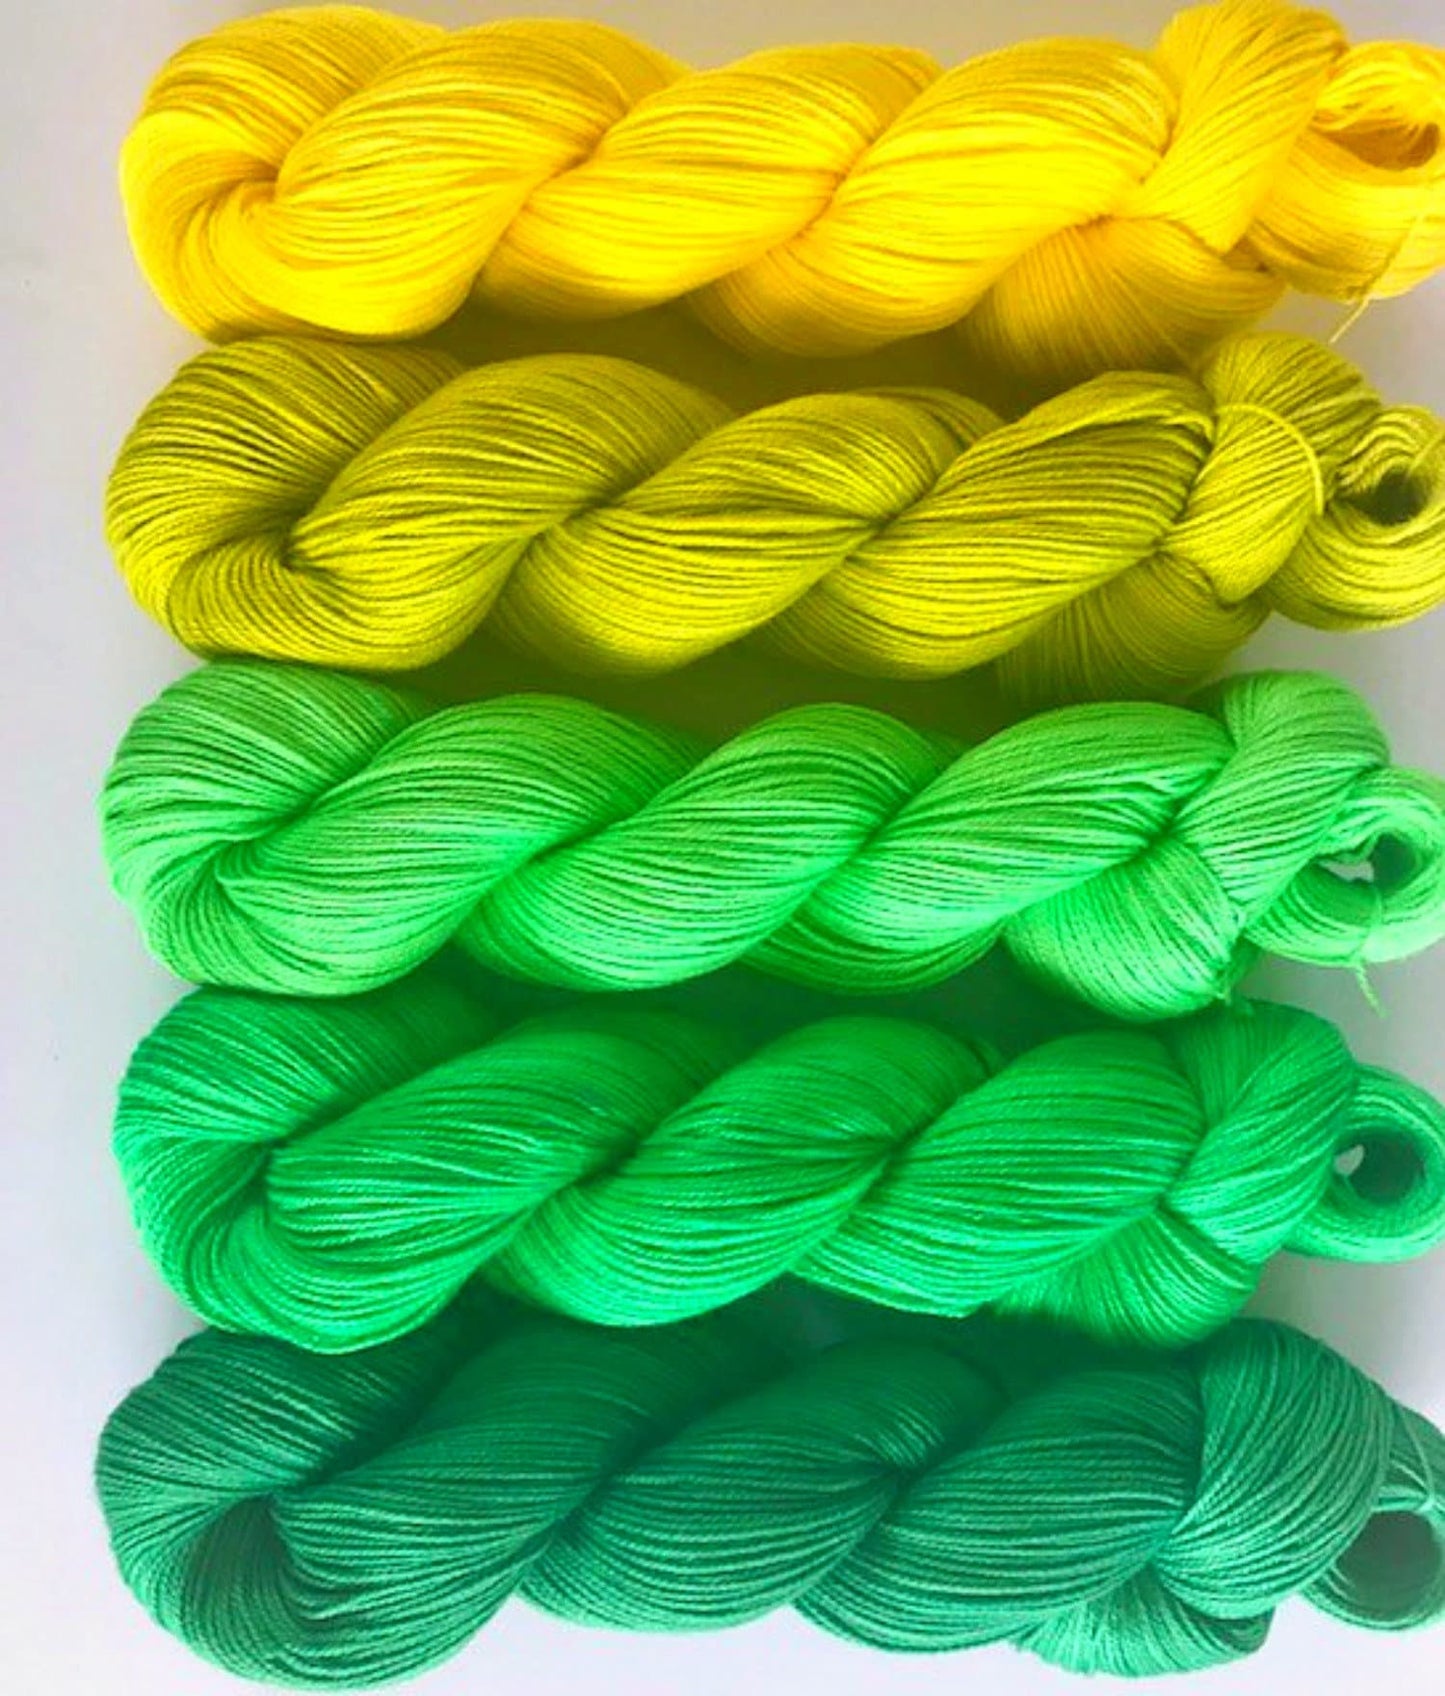 Vegan Yarn Kit - Hand Dyed - Yellow and Green Gradient - Bamboo Cotton - Fingering / Sock Weight - Semi Solids - Tonal Artisan Fiber Kit